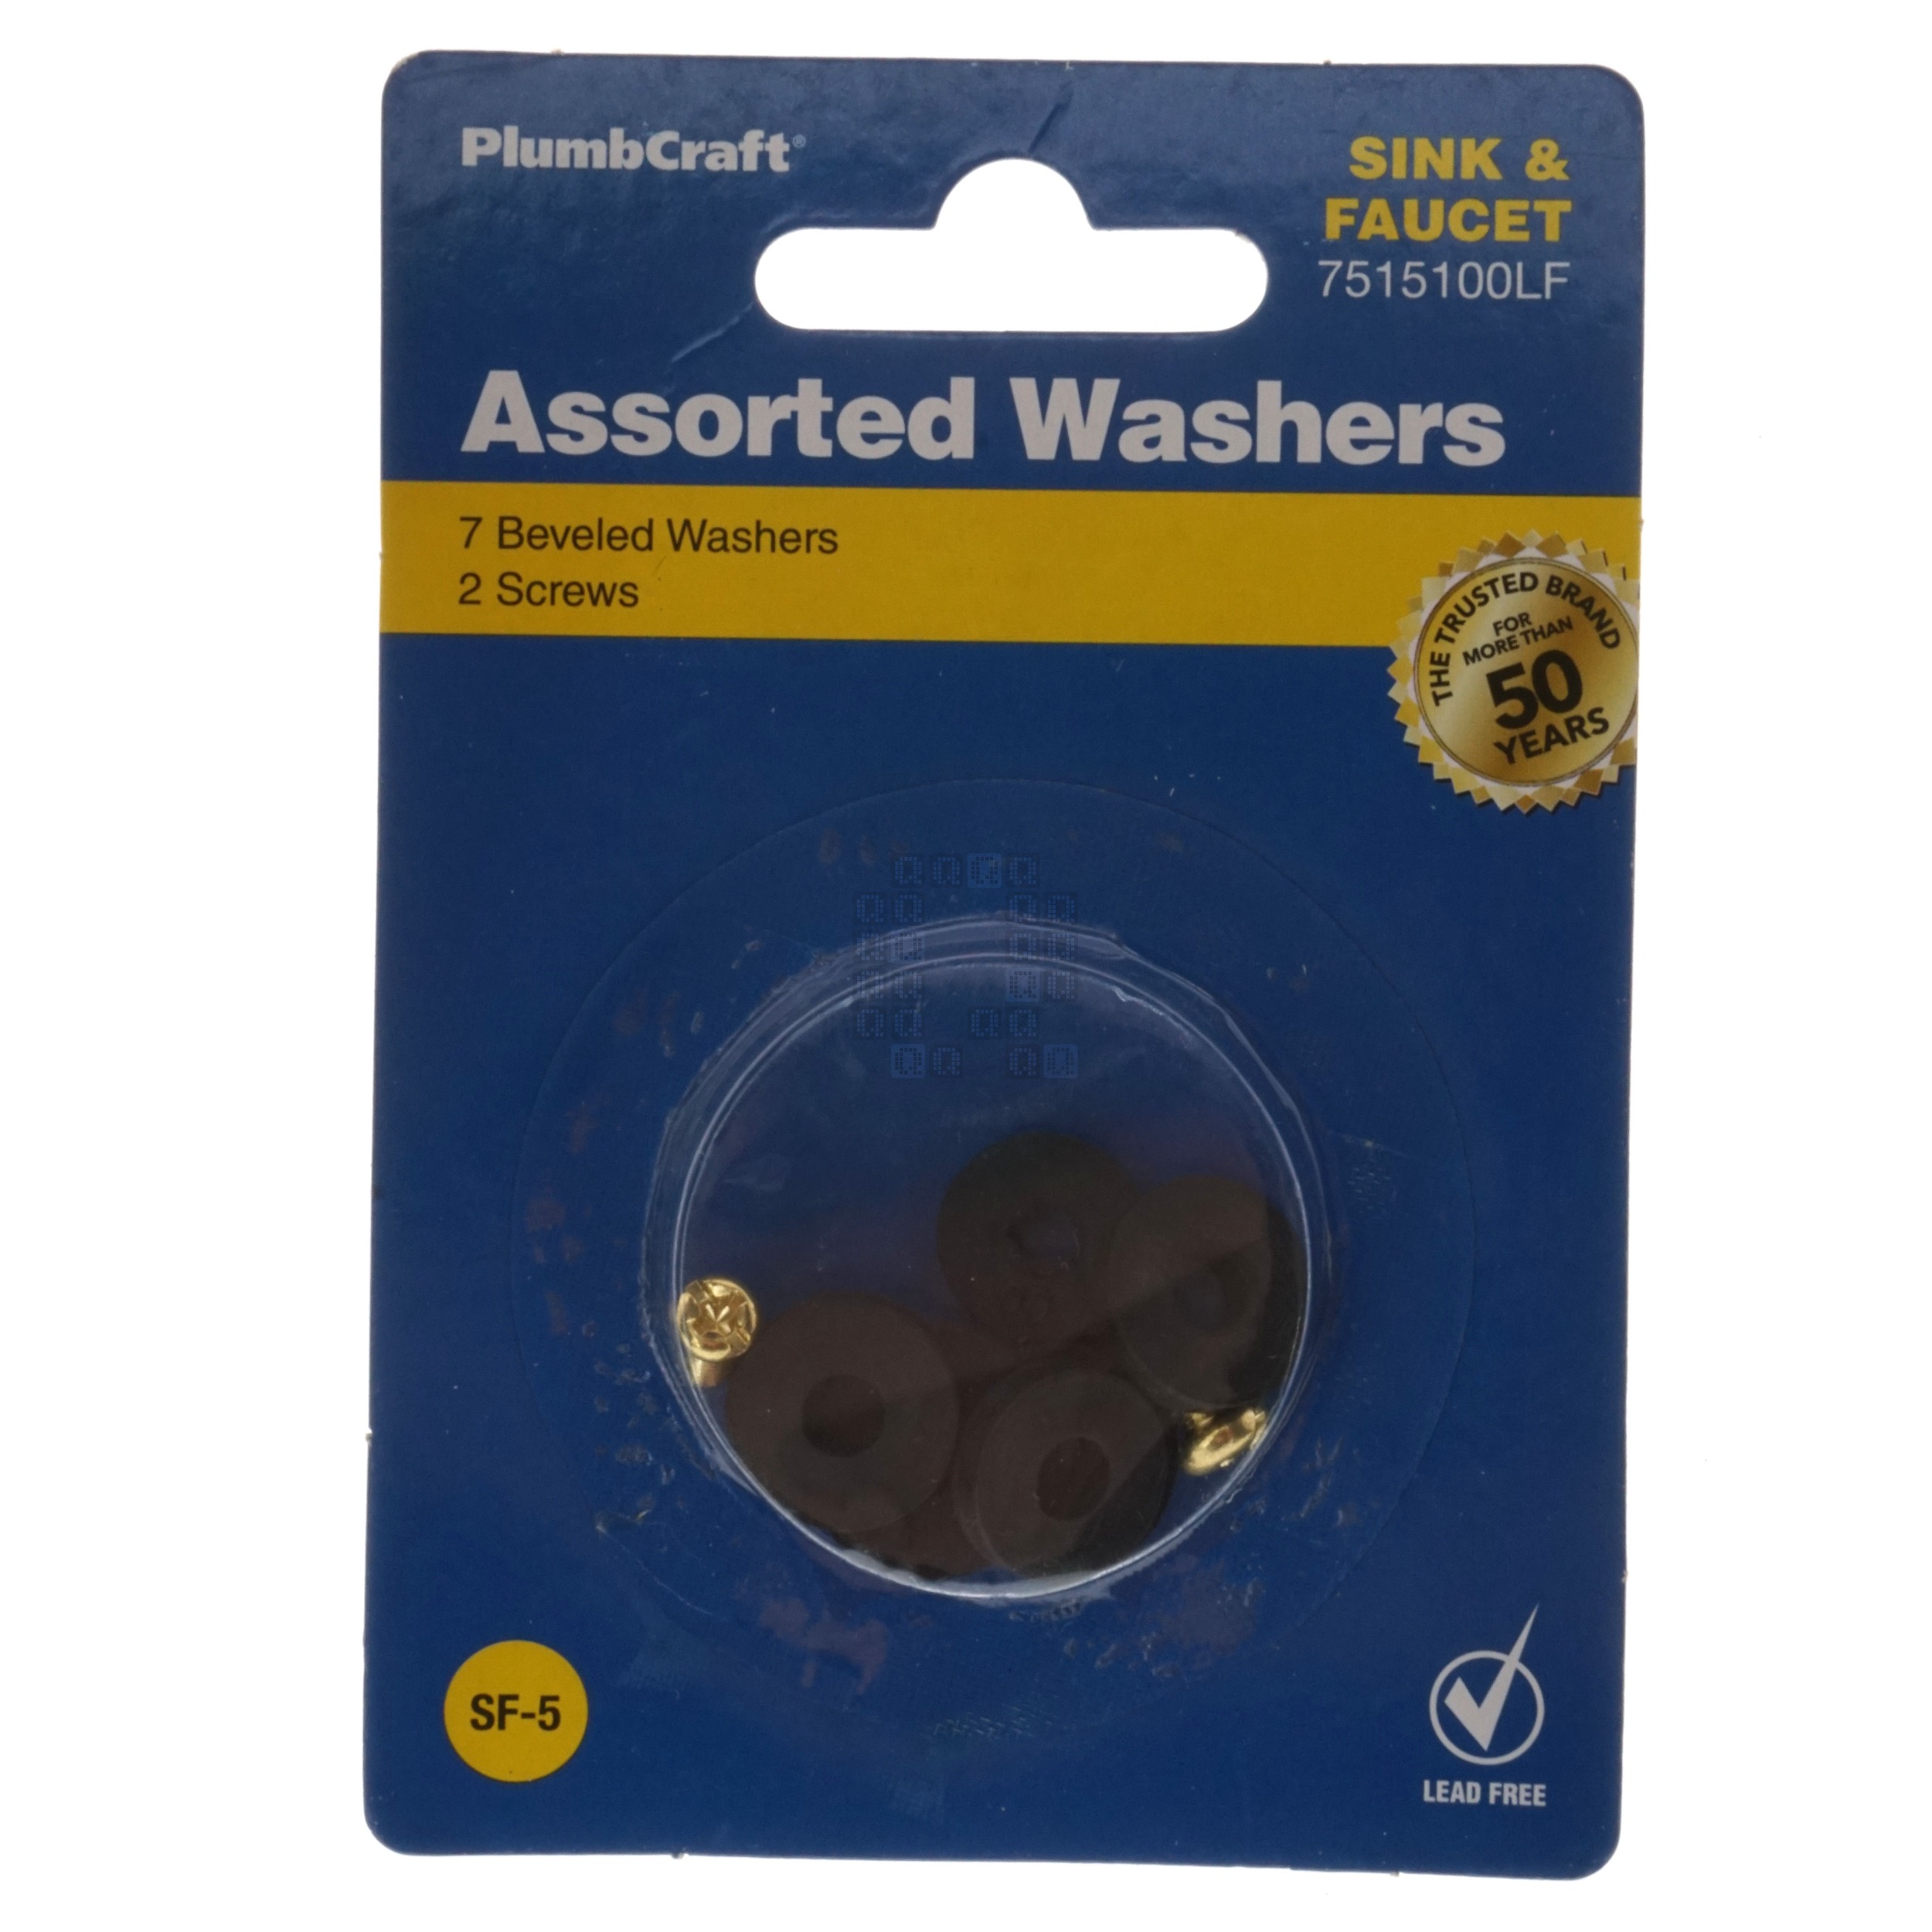 PlumbCraft 7515100LF Assorted Washer Kit, 7 Flat Washers & 2 Screws